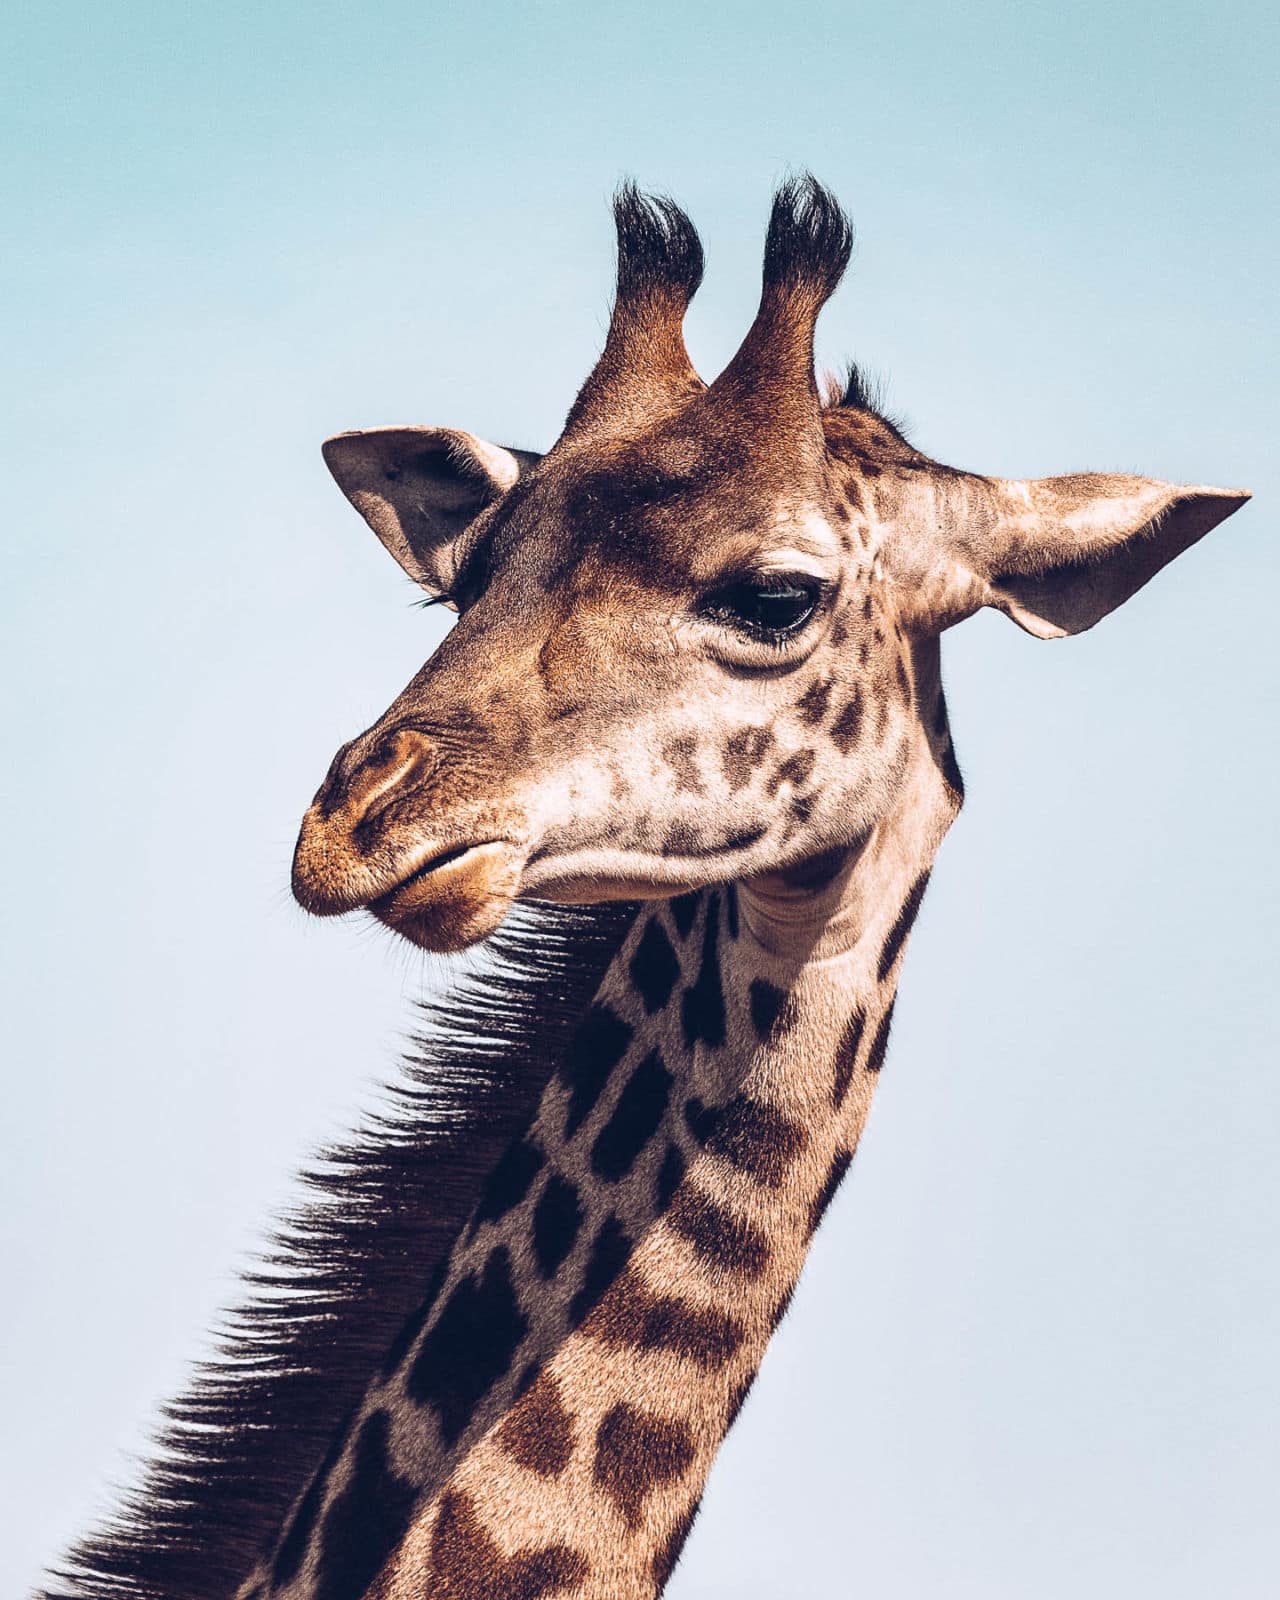 Do giraffes have horns on their heads?